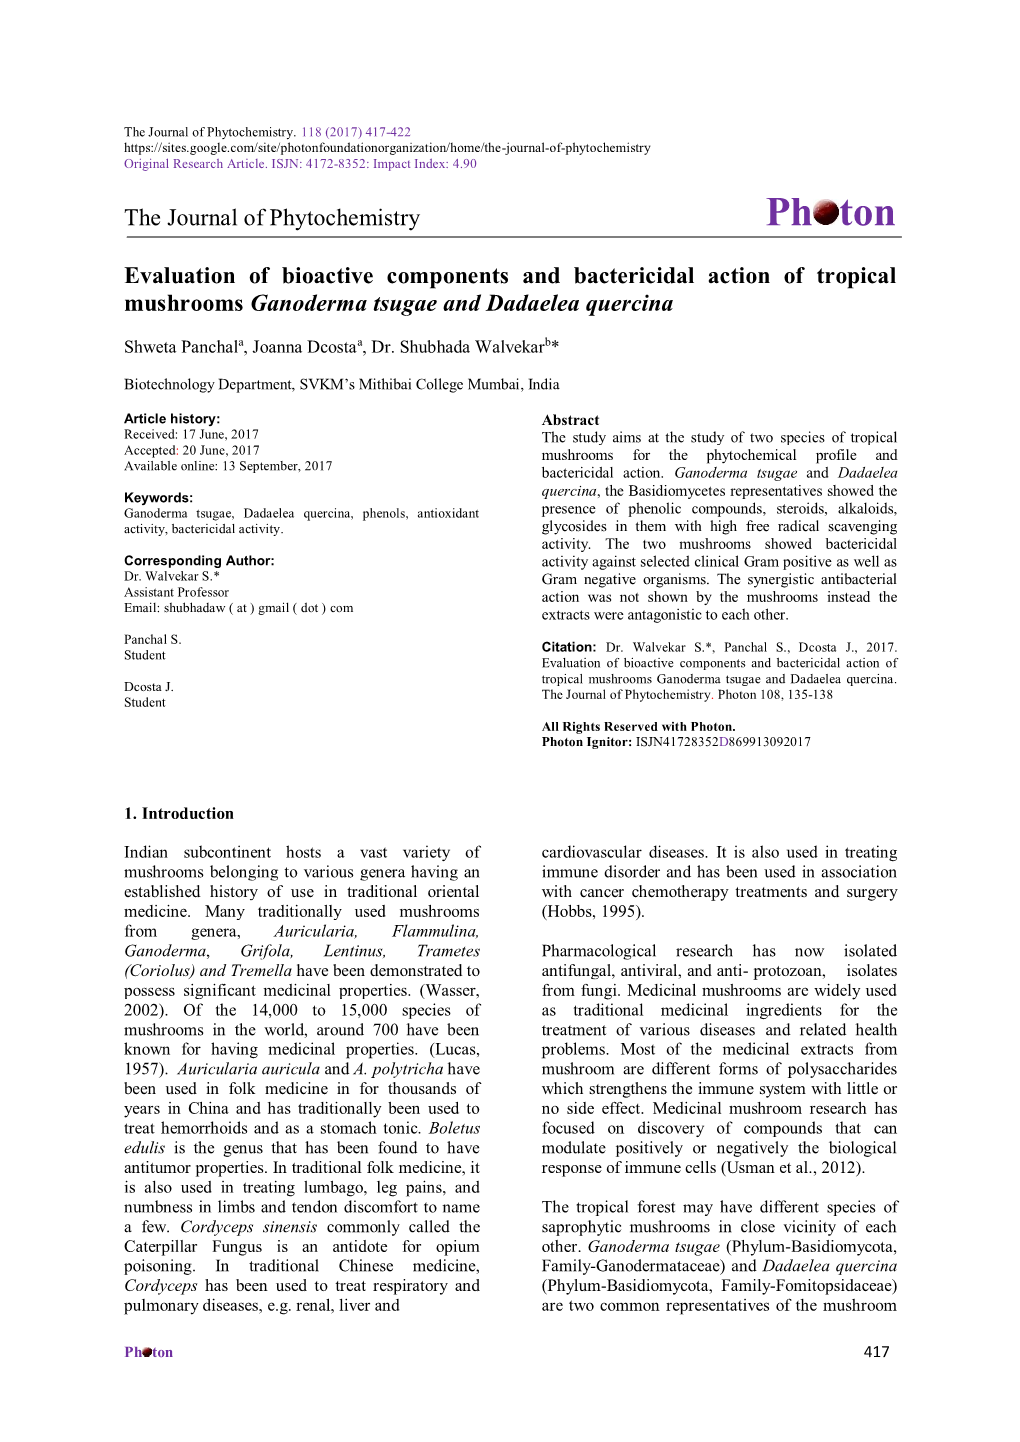 Evaluation of Bioactive Components and Bactericidal Action of Tropical Mushrooms Ganoderma Tsugae and Dadaelea Quercina